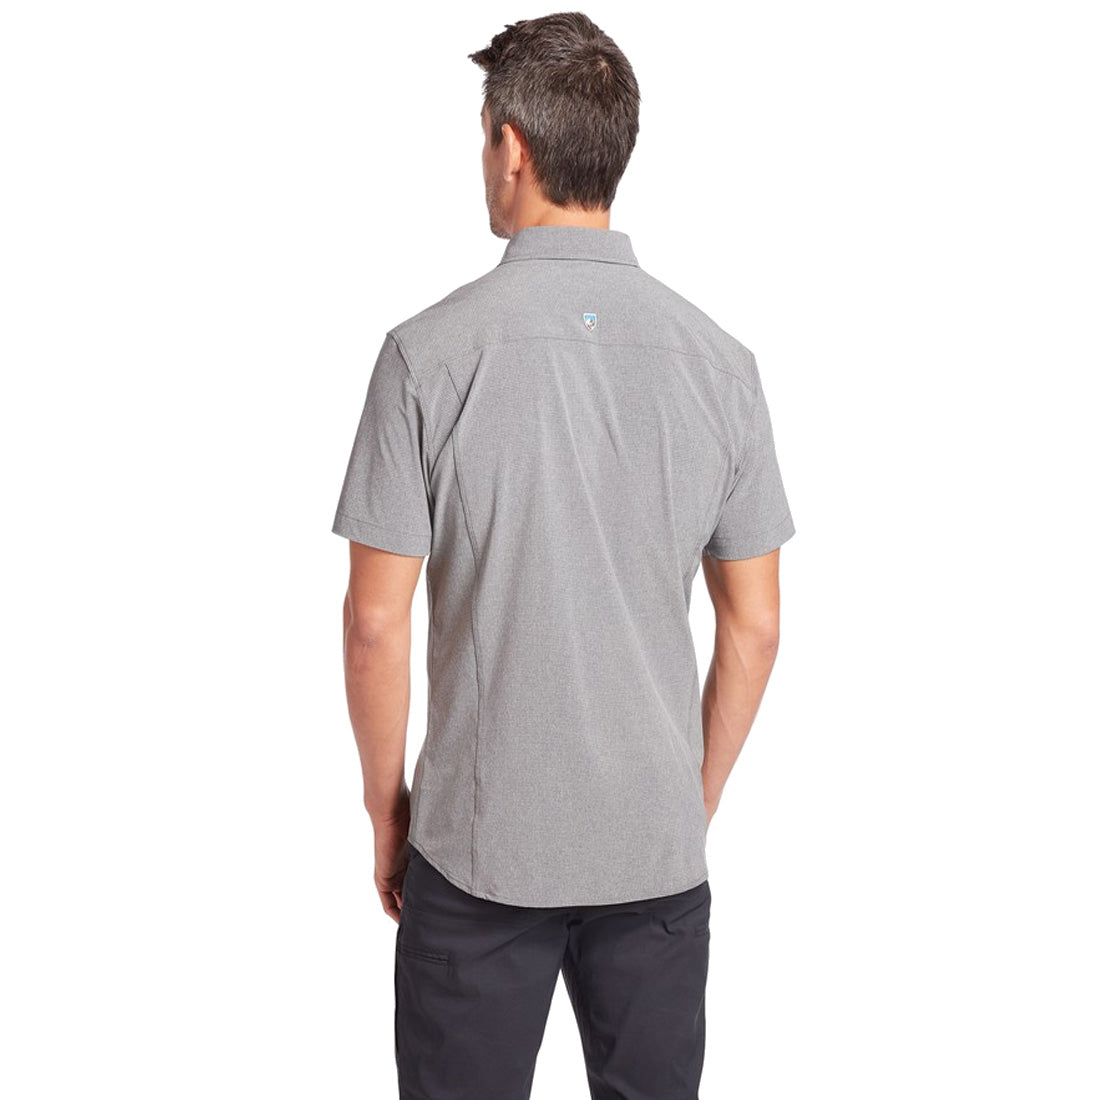 KUHL Optimizr Short Sleeve Shirt - Men's